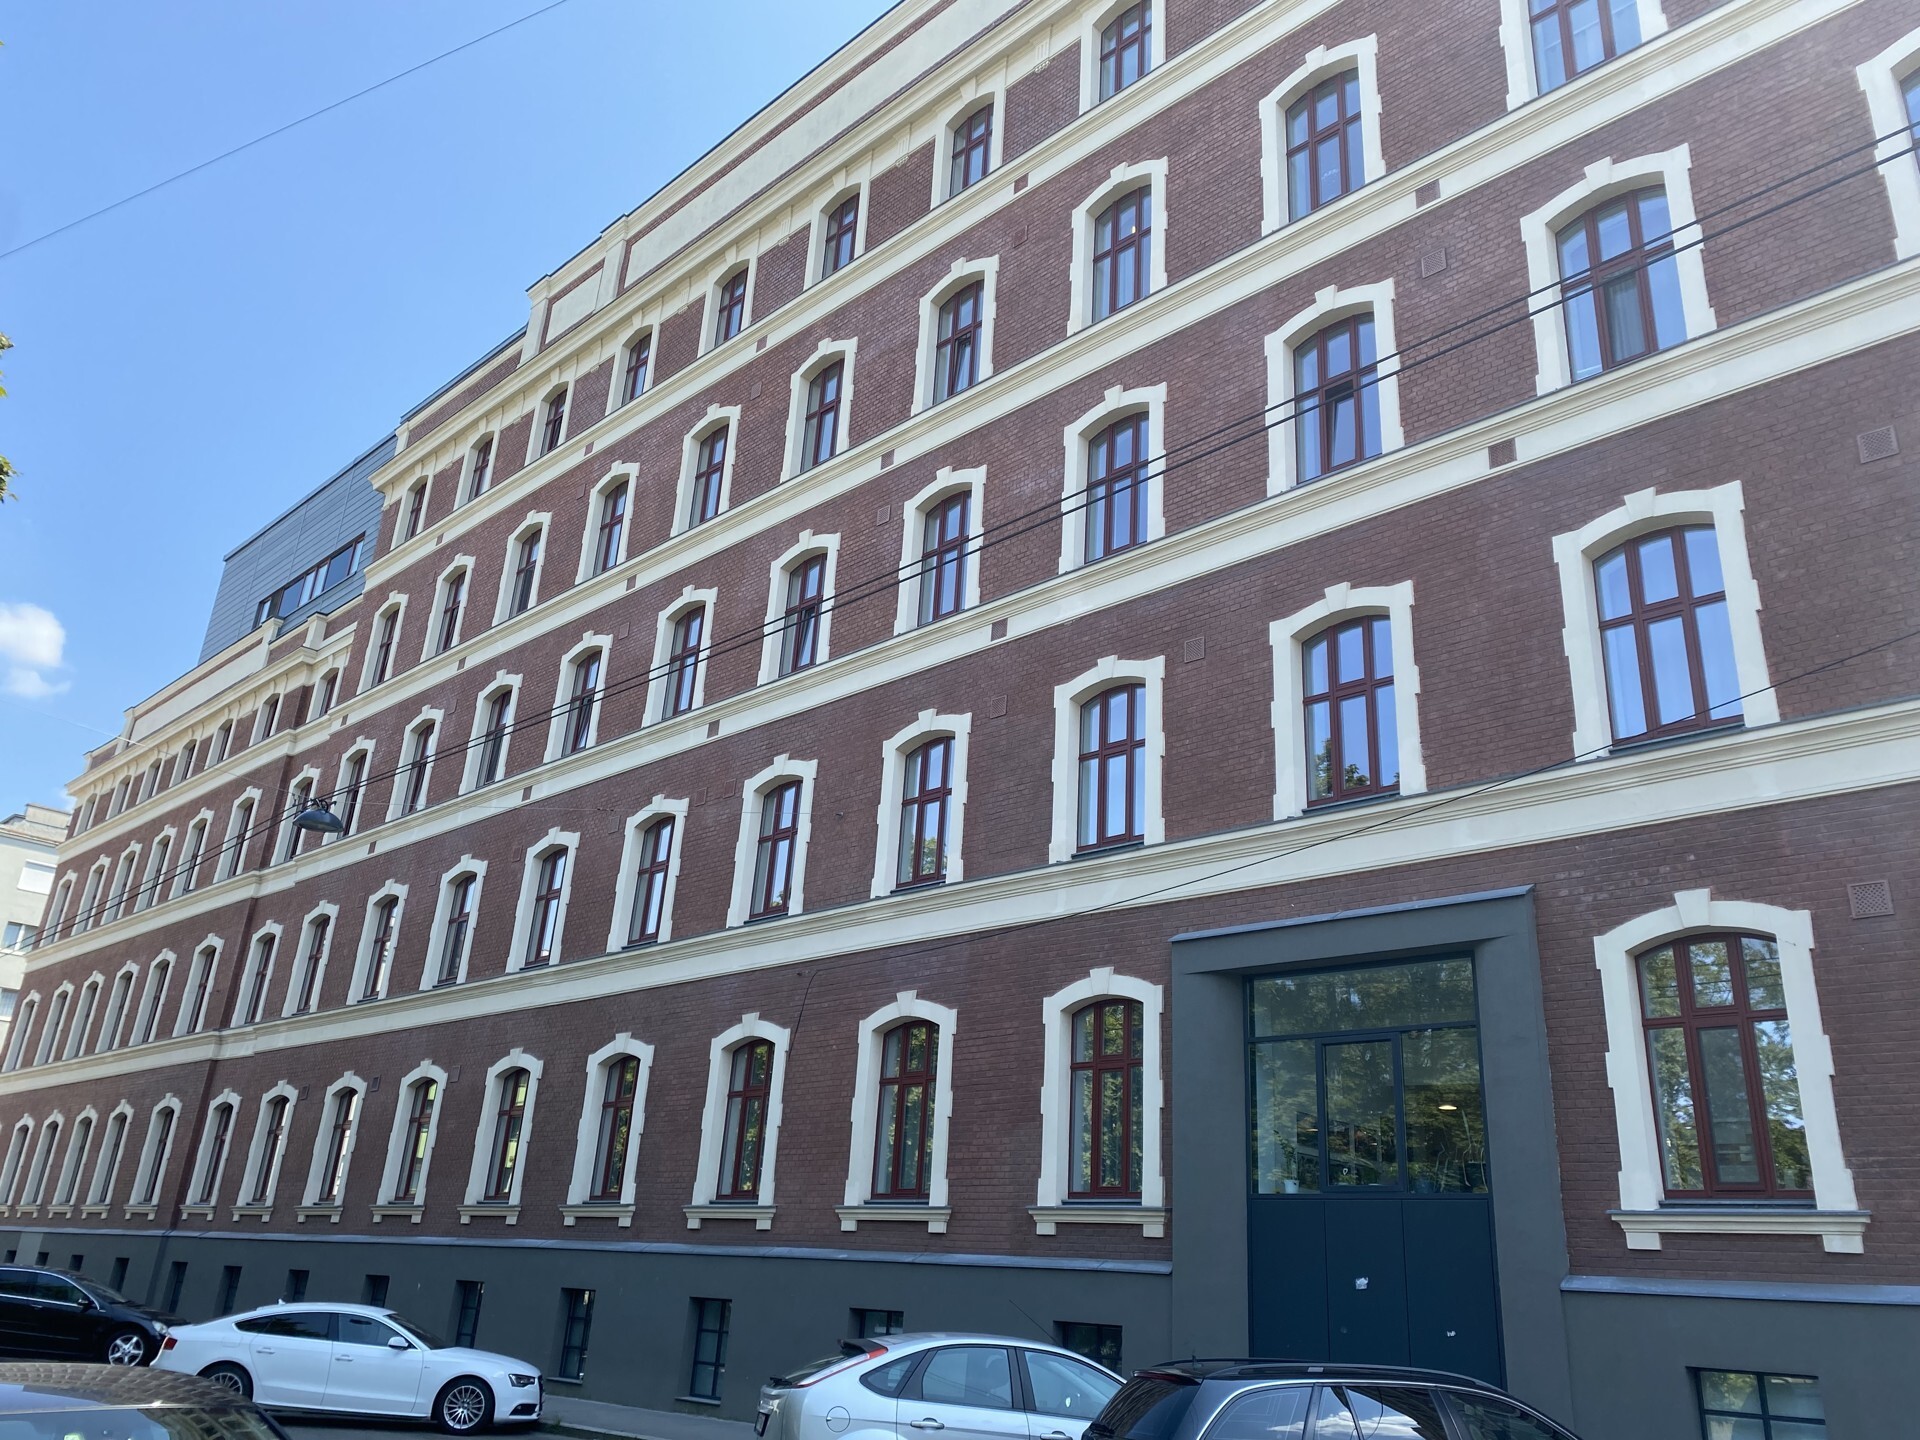 Büro nahe Matzleinsdorfer Platz in 1100 Wien zu mieten